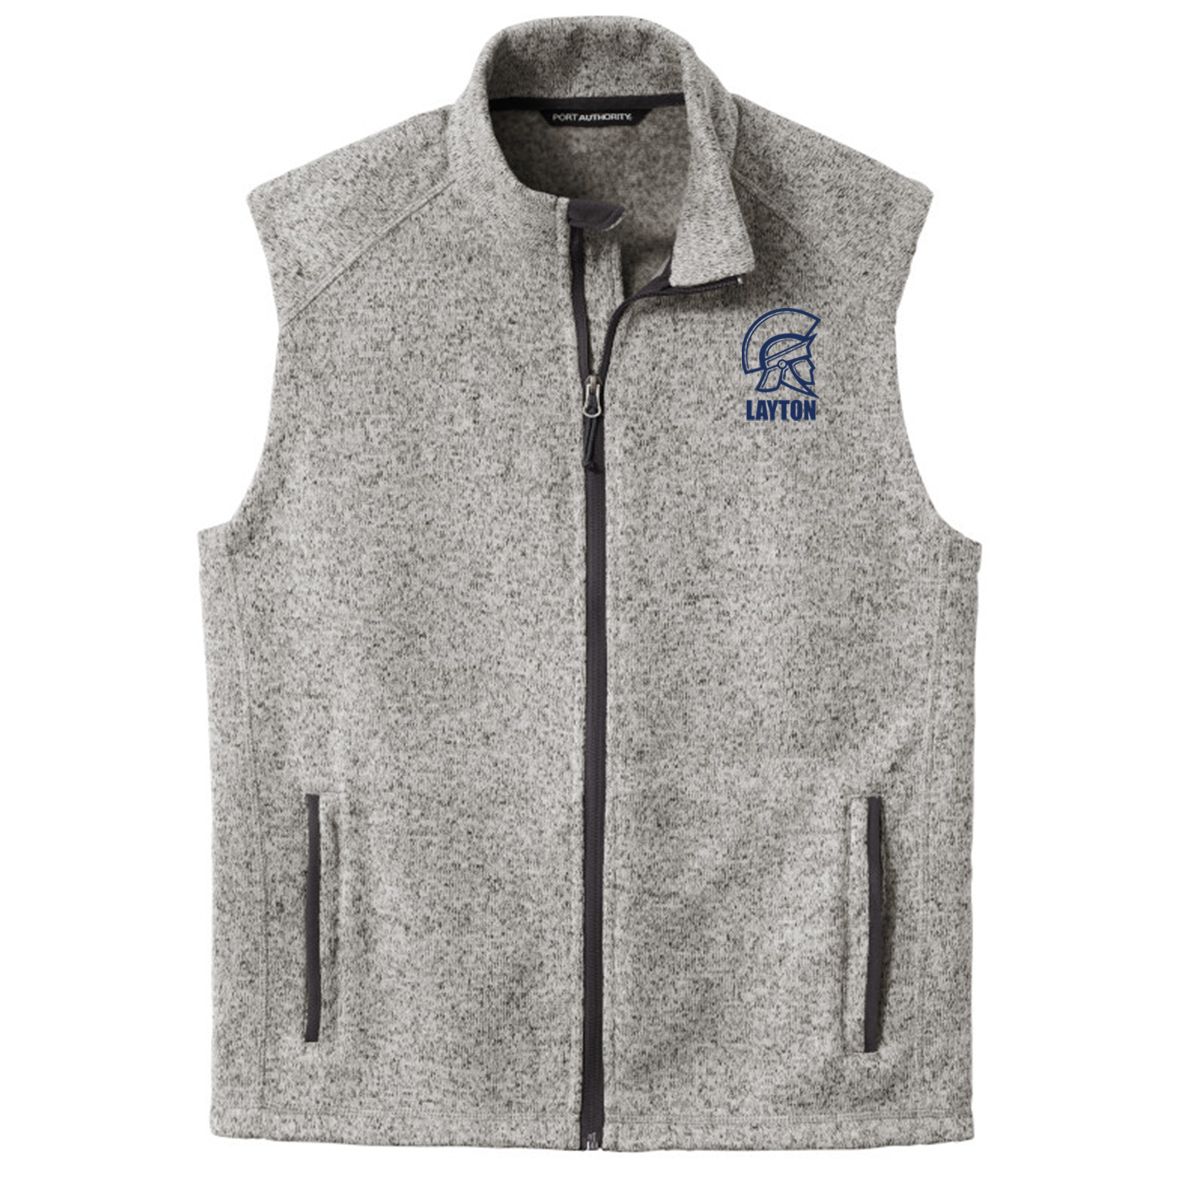 Layton High School - Fleece Vest